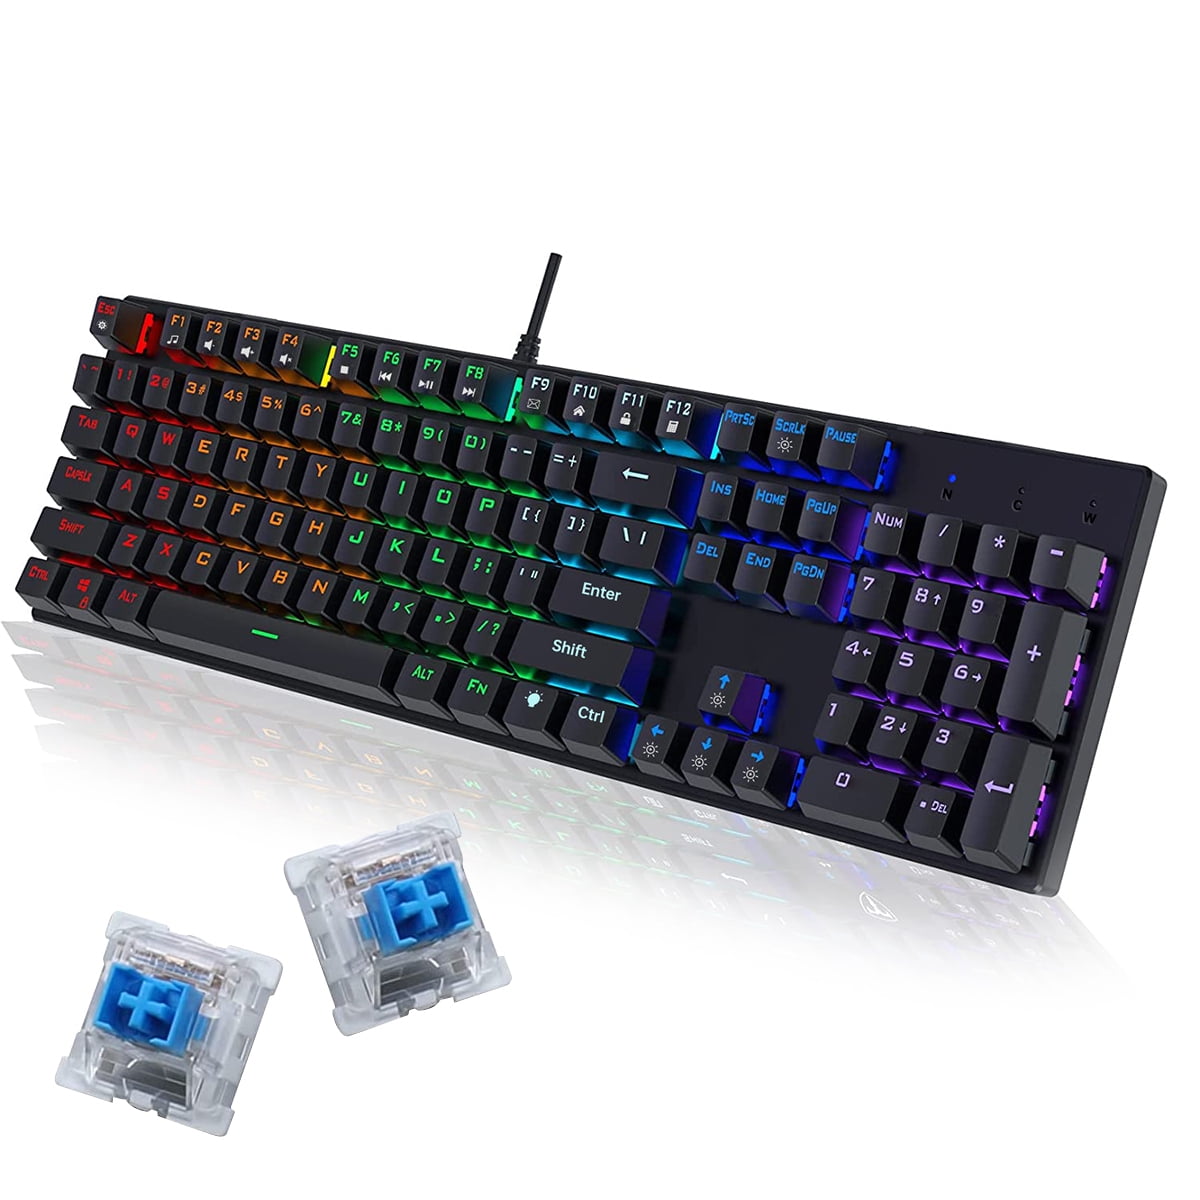 Logitech G213 Prodigy Gaming Keyboard, LIGHTSYNC RGB Backlit Keys